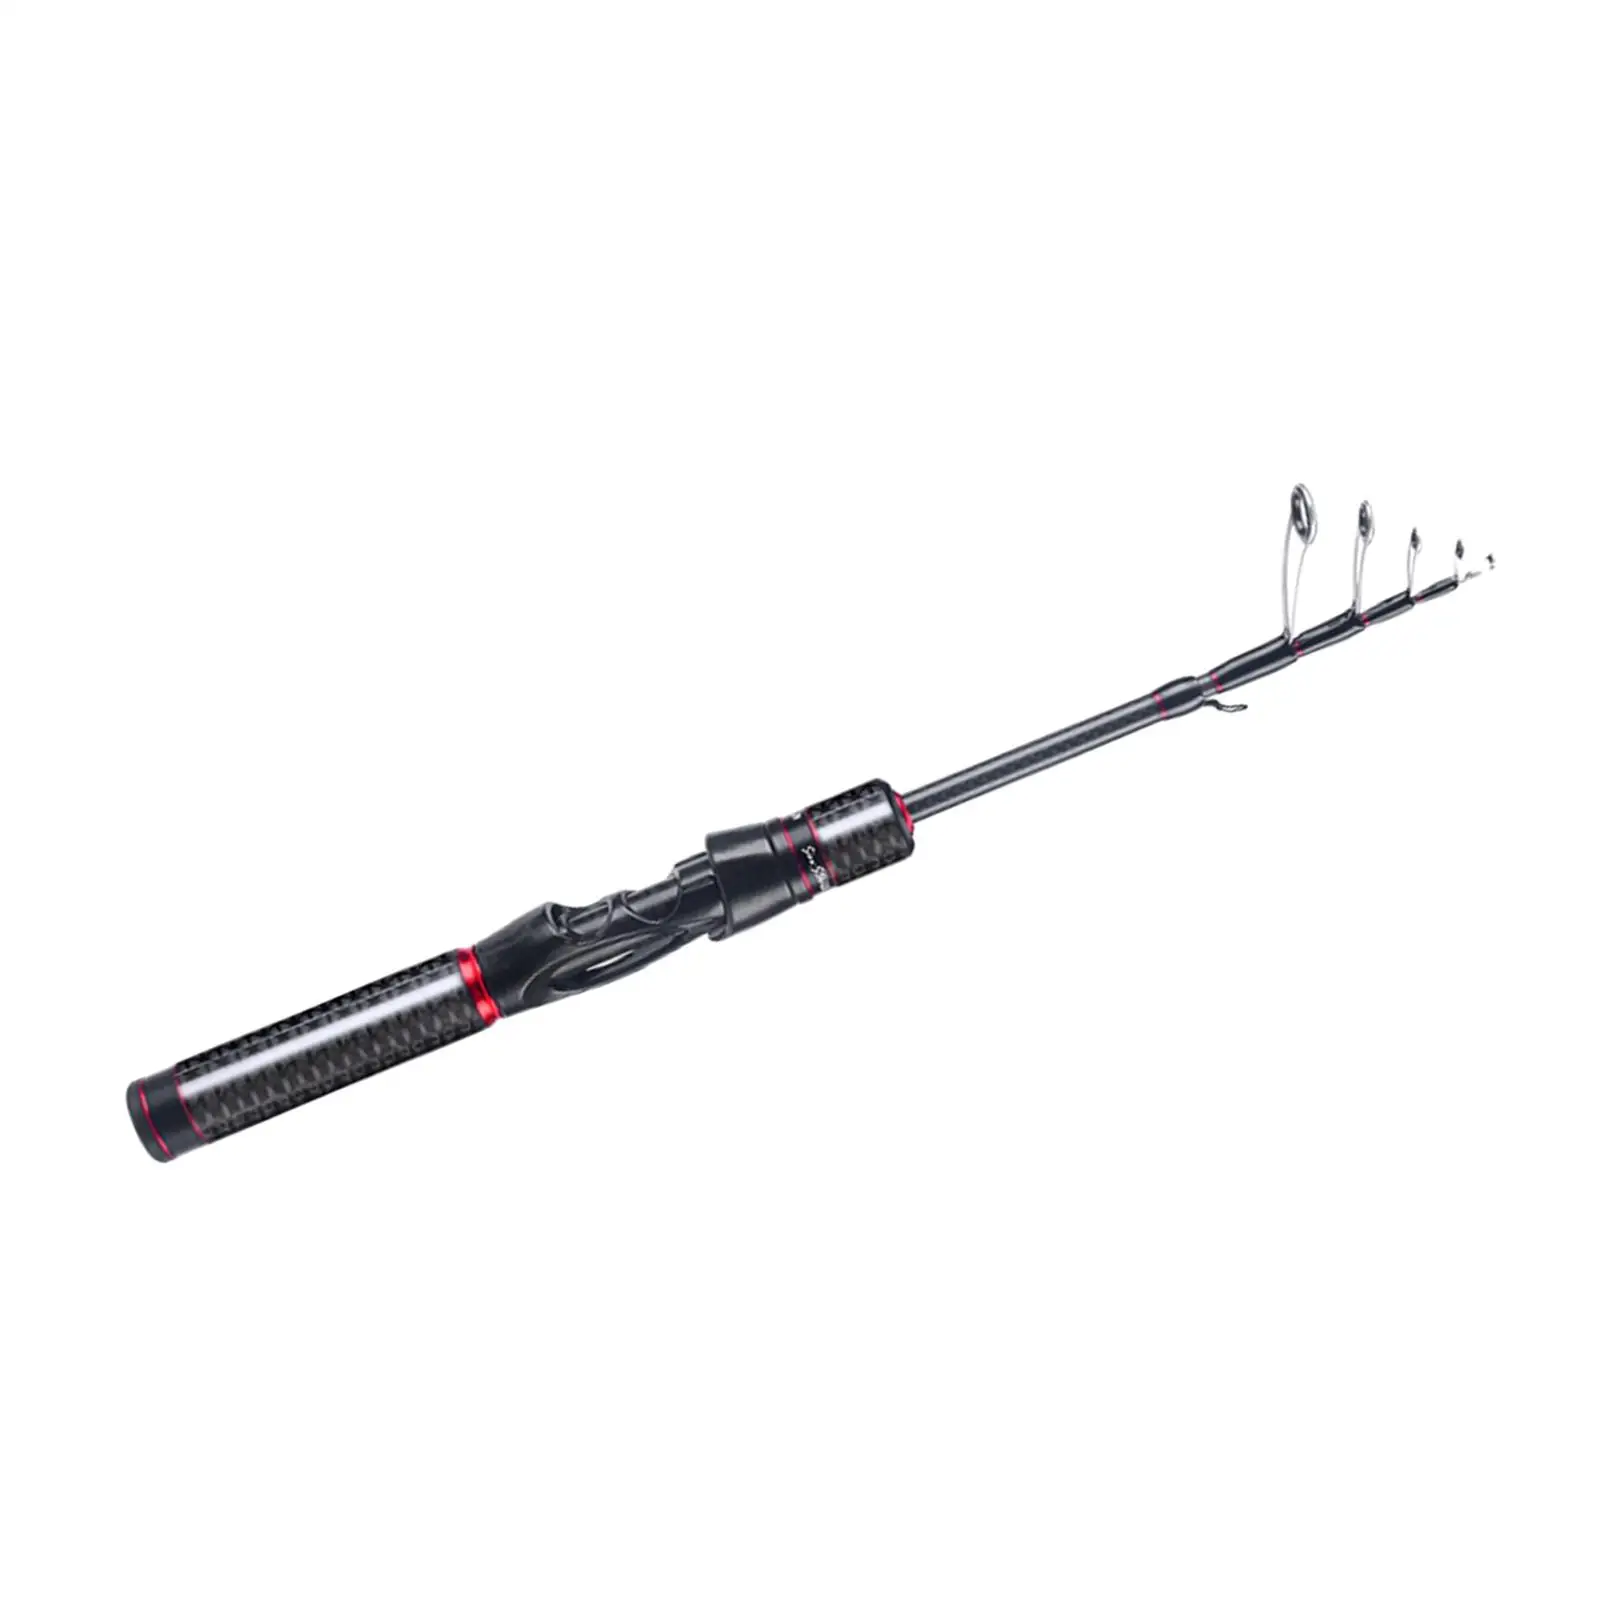 Carbon Fiber Fishing Rod, Telescopic Fishing Pole Fish Rod Retractable Handle, Fishing Tool for Salmon Bass Carp Trout